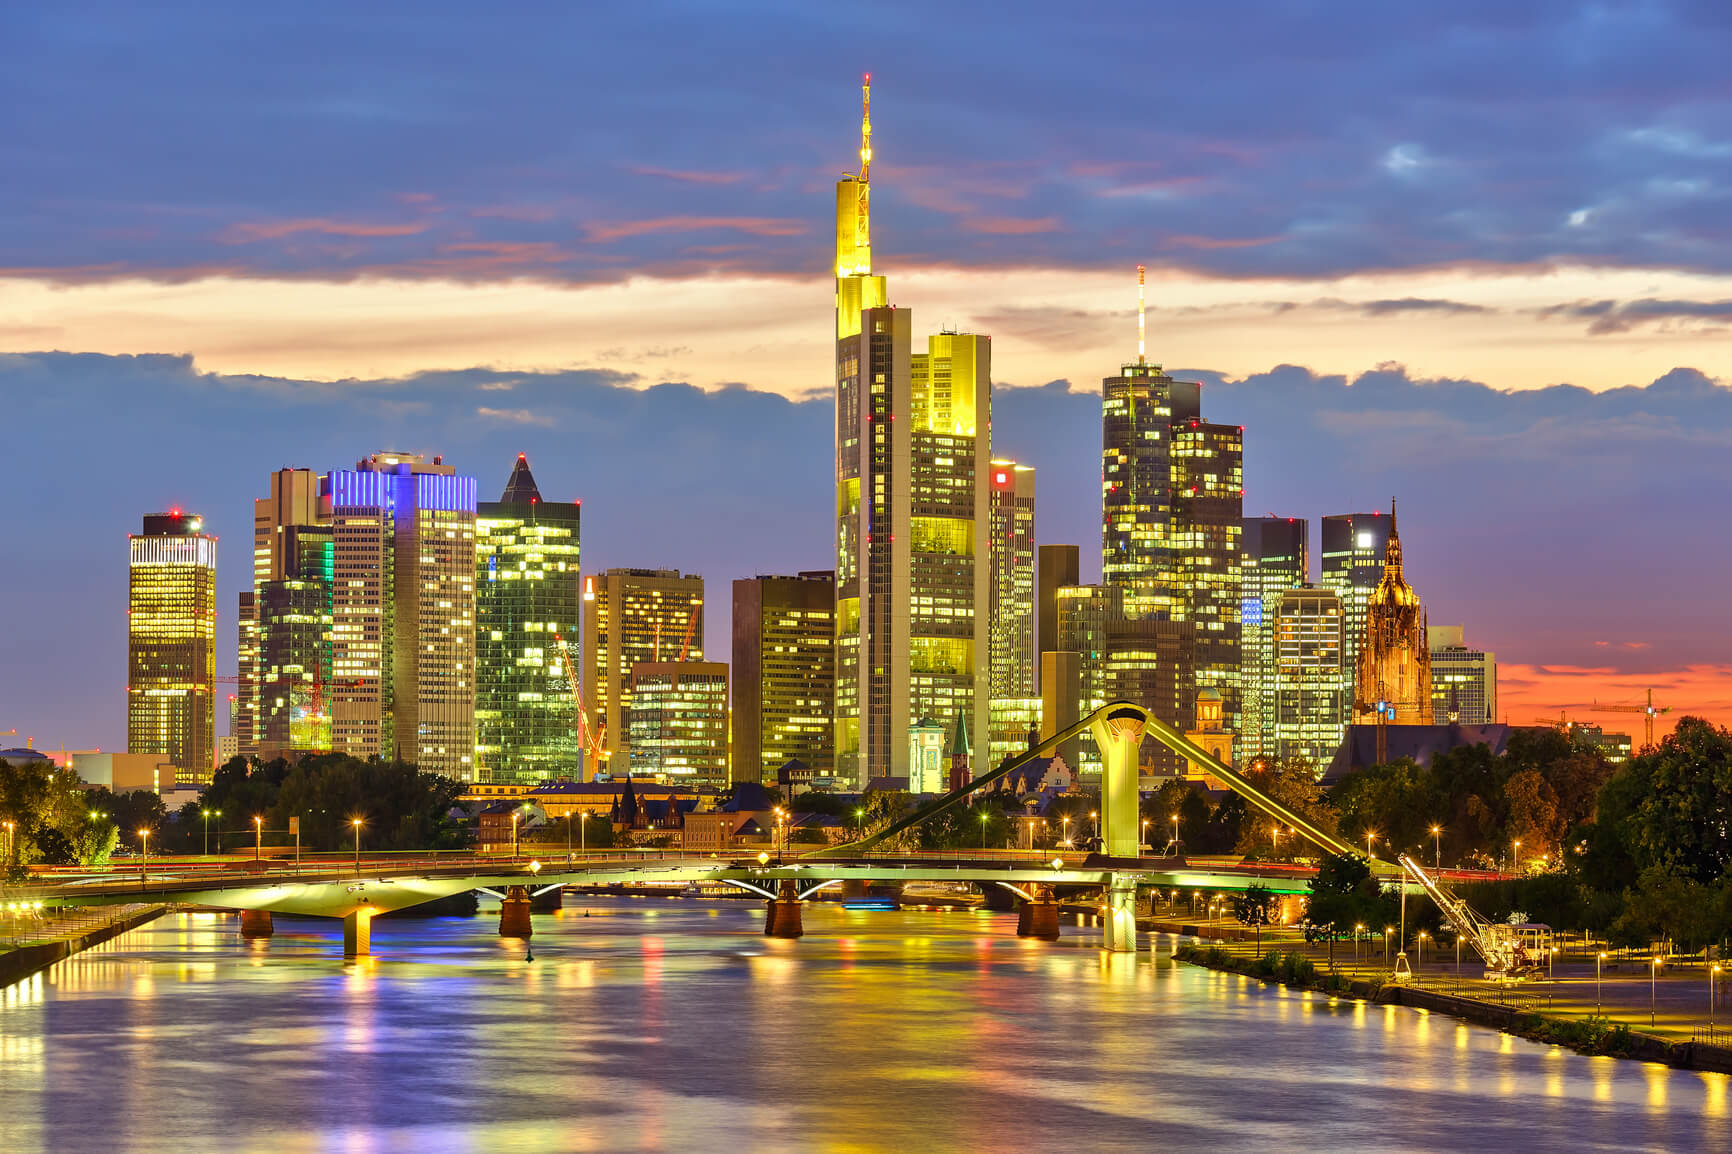 Flight deals from Melbourne, Australia to Frankfurt, Germany | Secret Flying